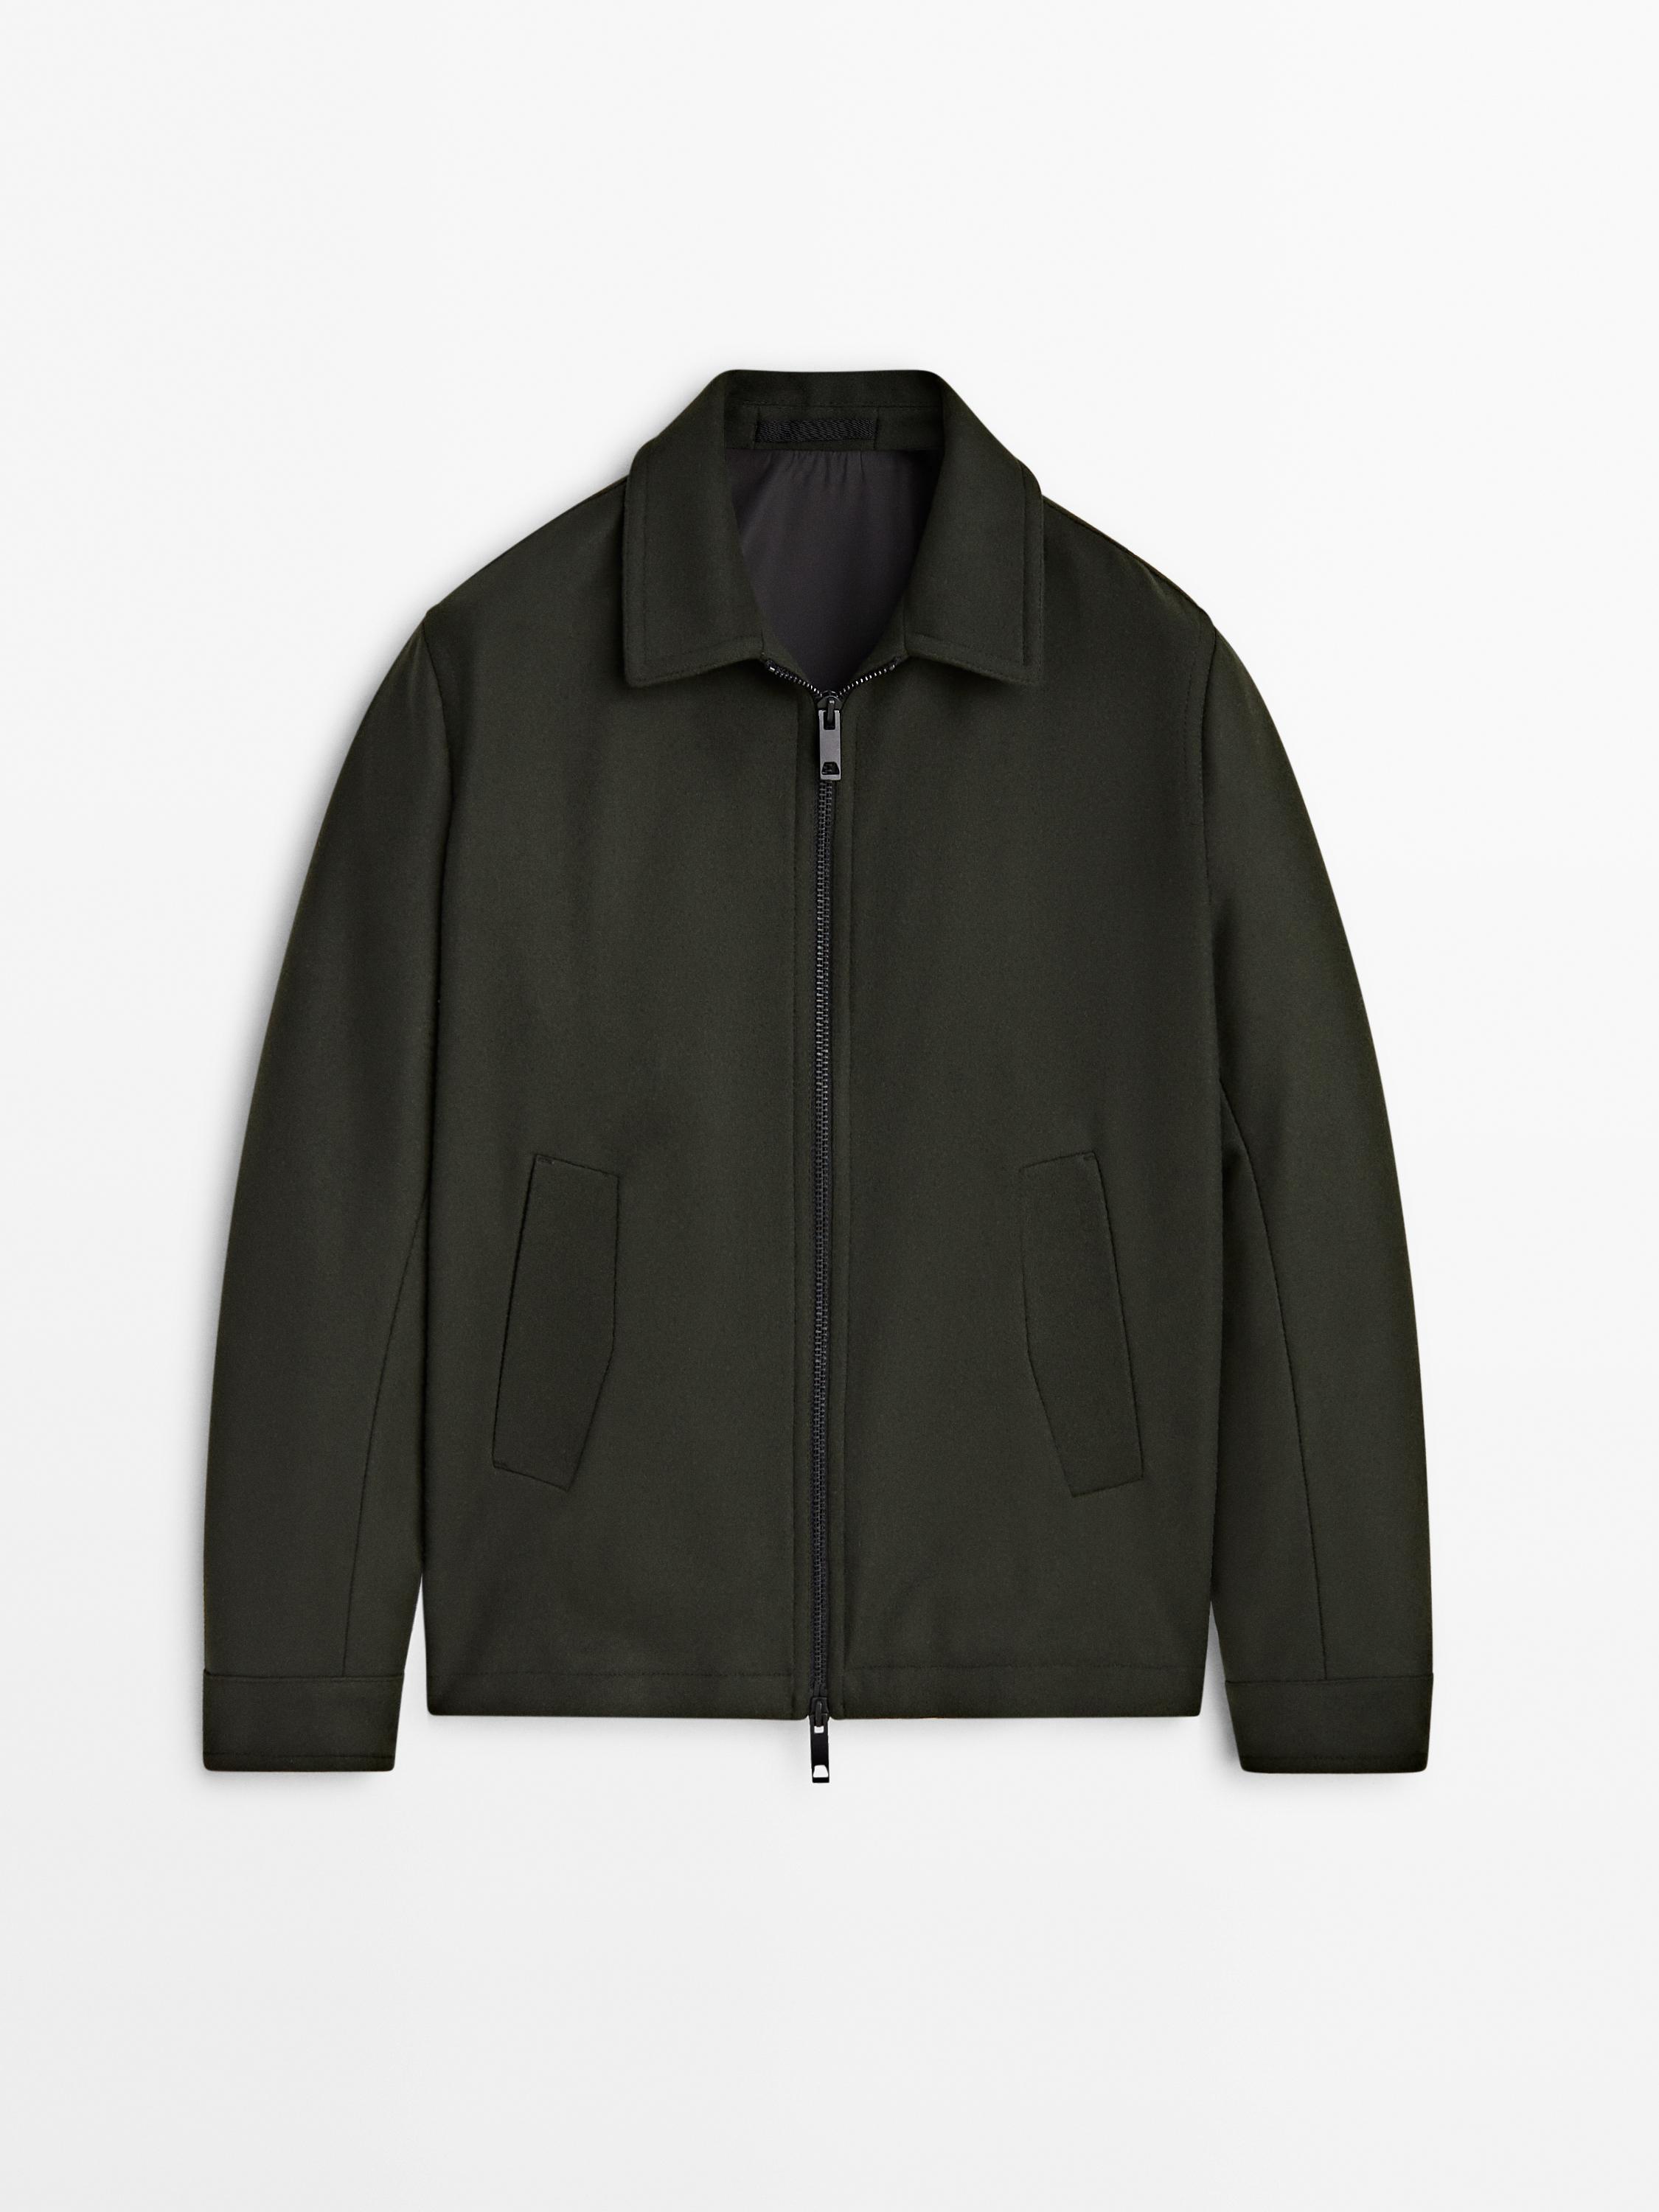 Wool blend jacket with zip - Studio - olive green | ZARA United States